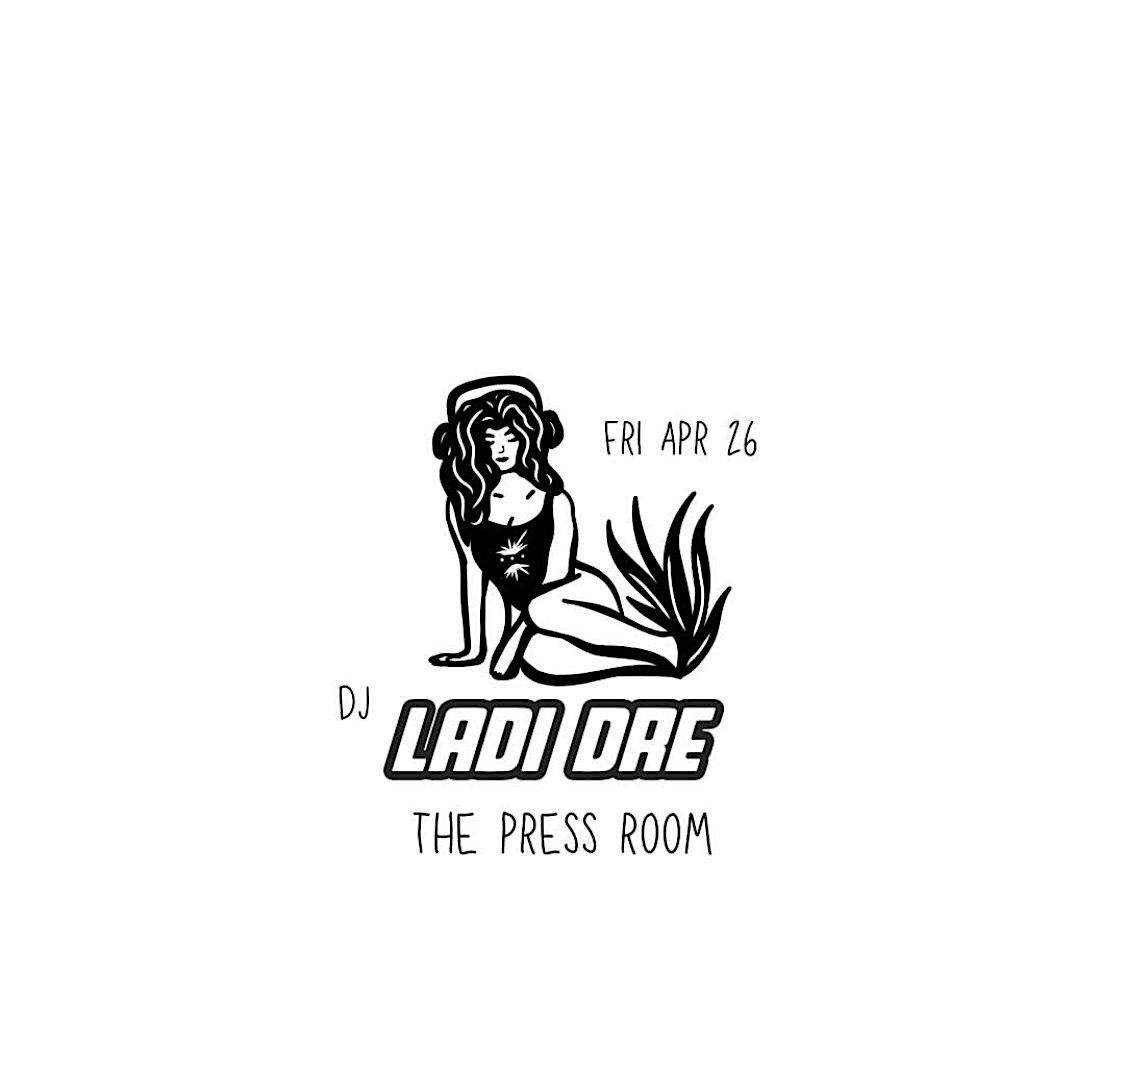 DJ Ladi Dre